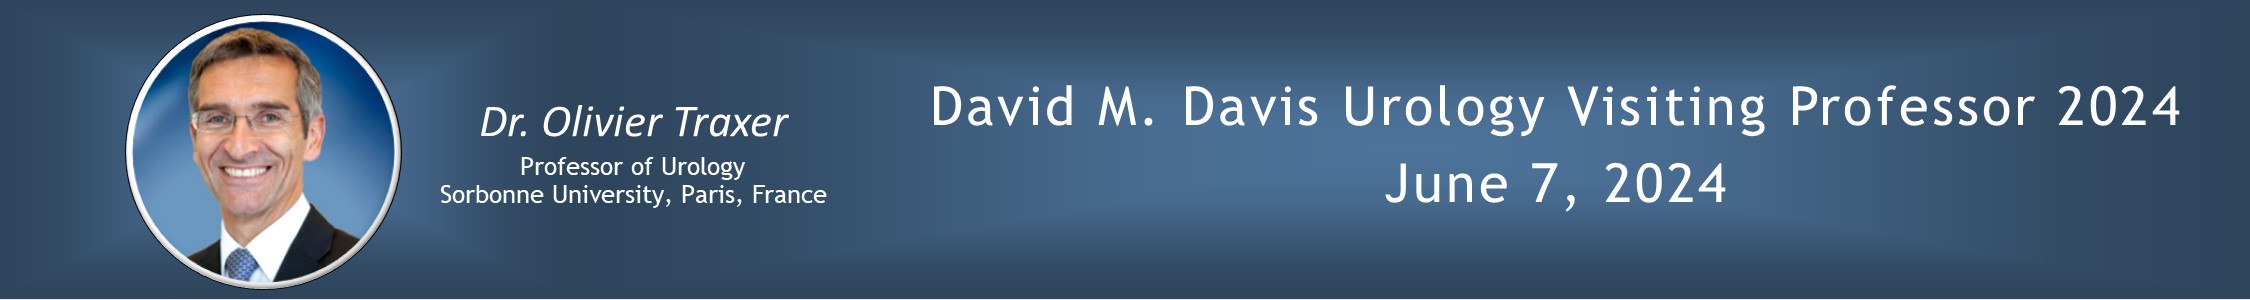 David M. Davis Urology Visiting Professor 2024 Banner